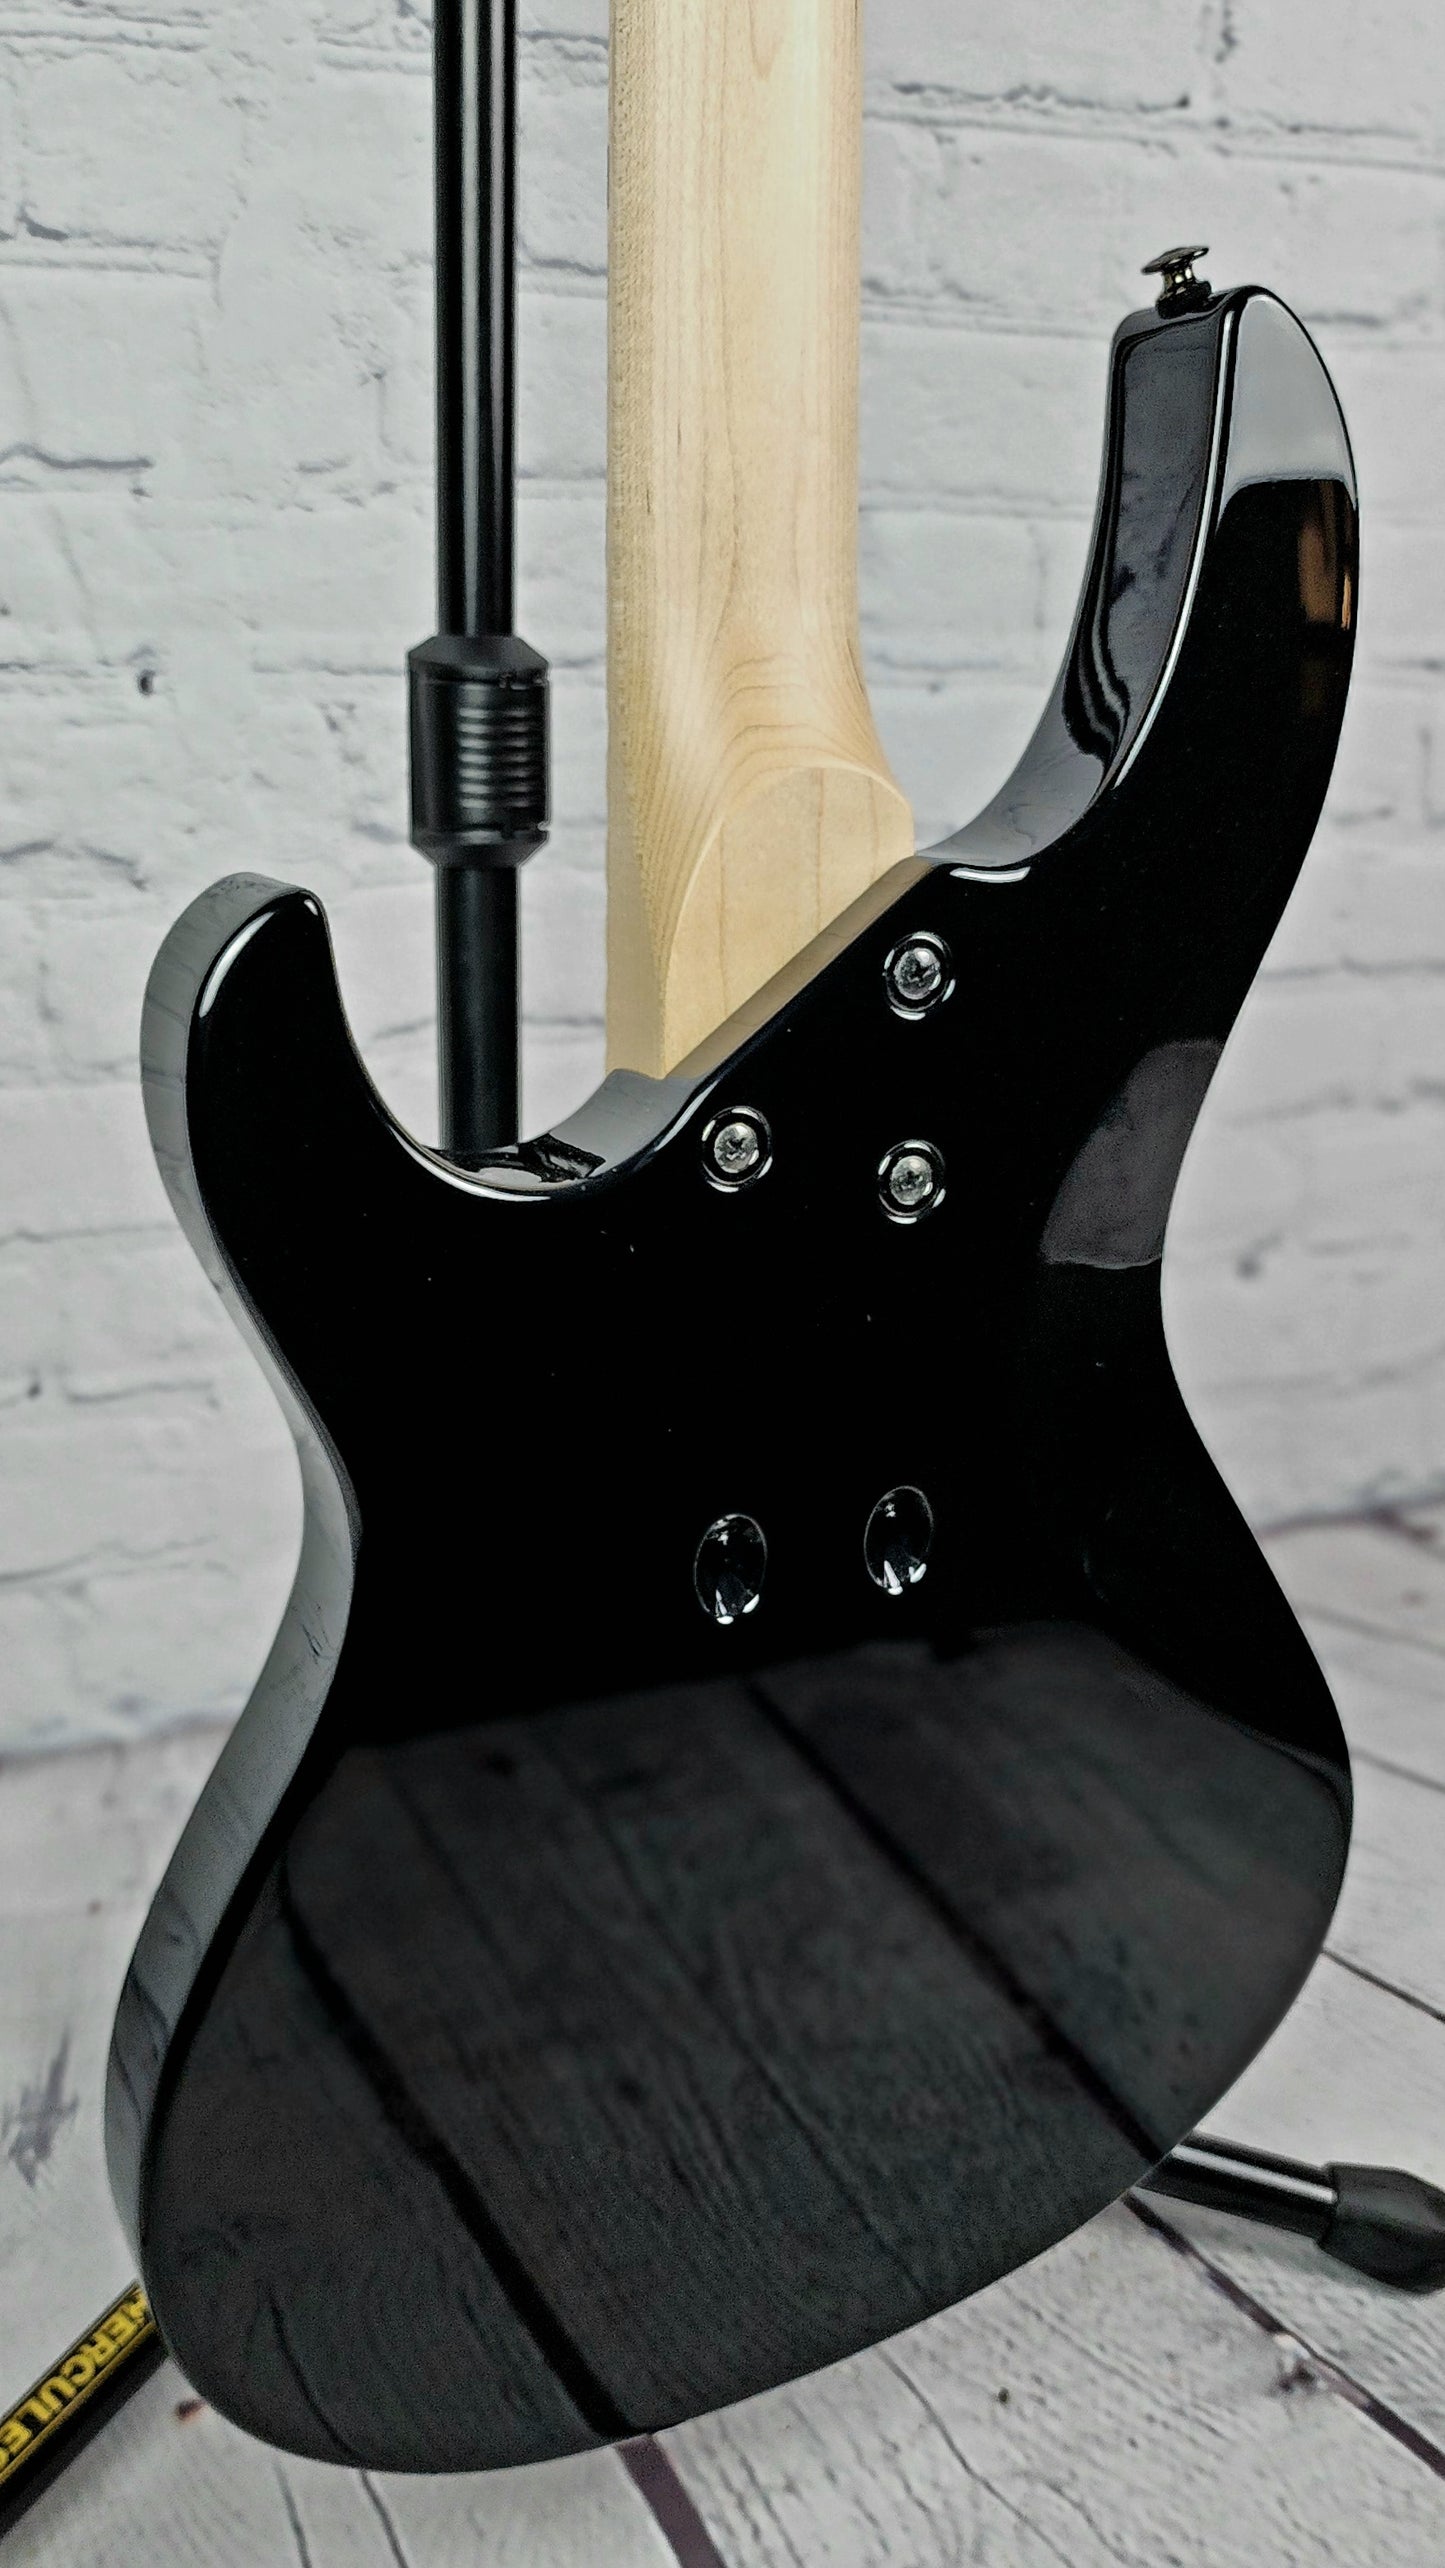 Yamaha Billy Sheehan Attitude III Limited Edition Bass ATTLTD3 Gloss Black